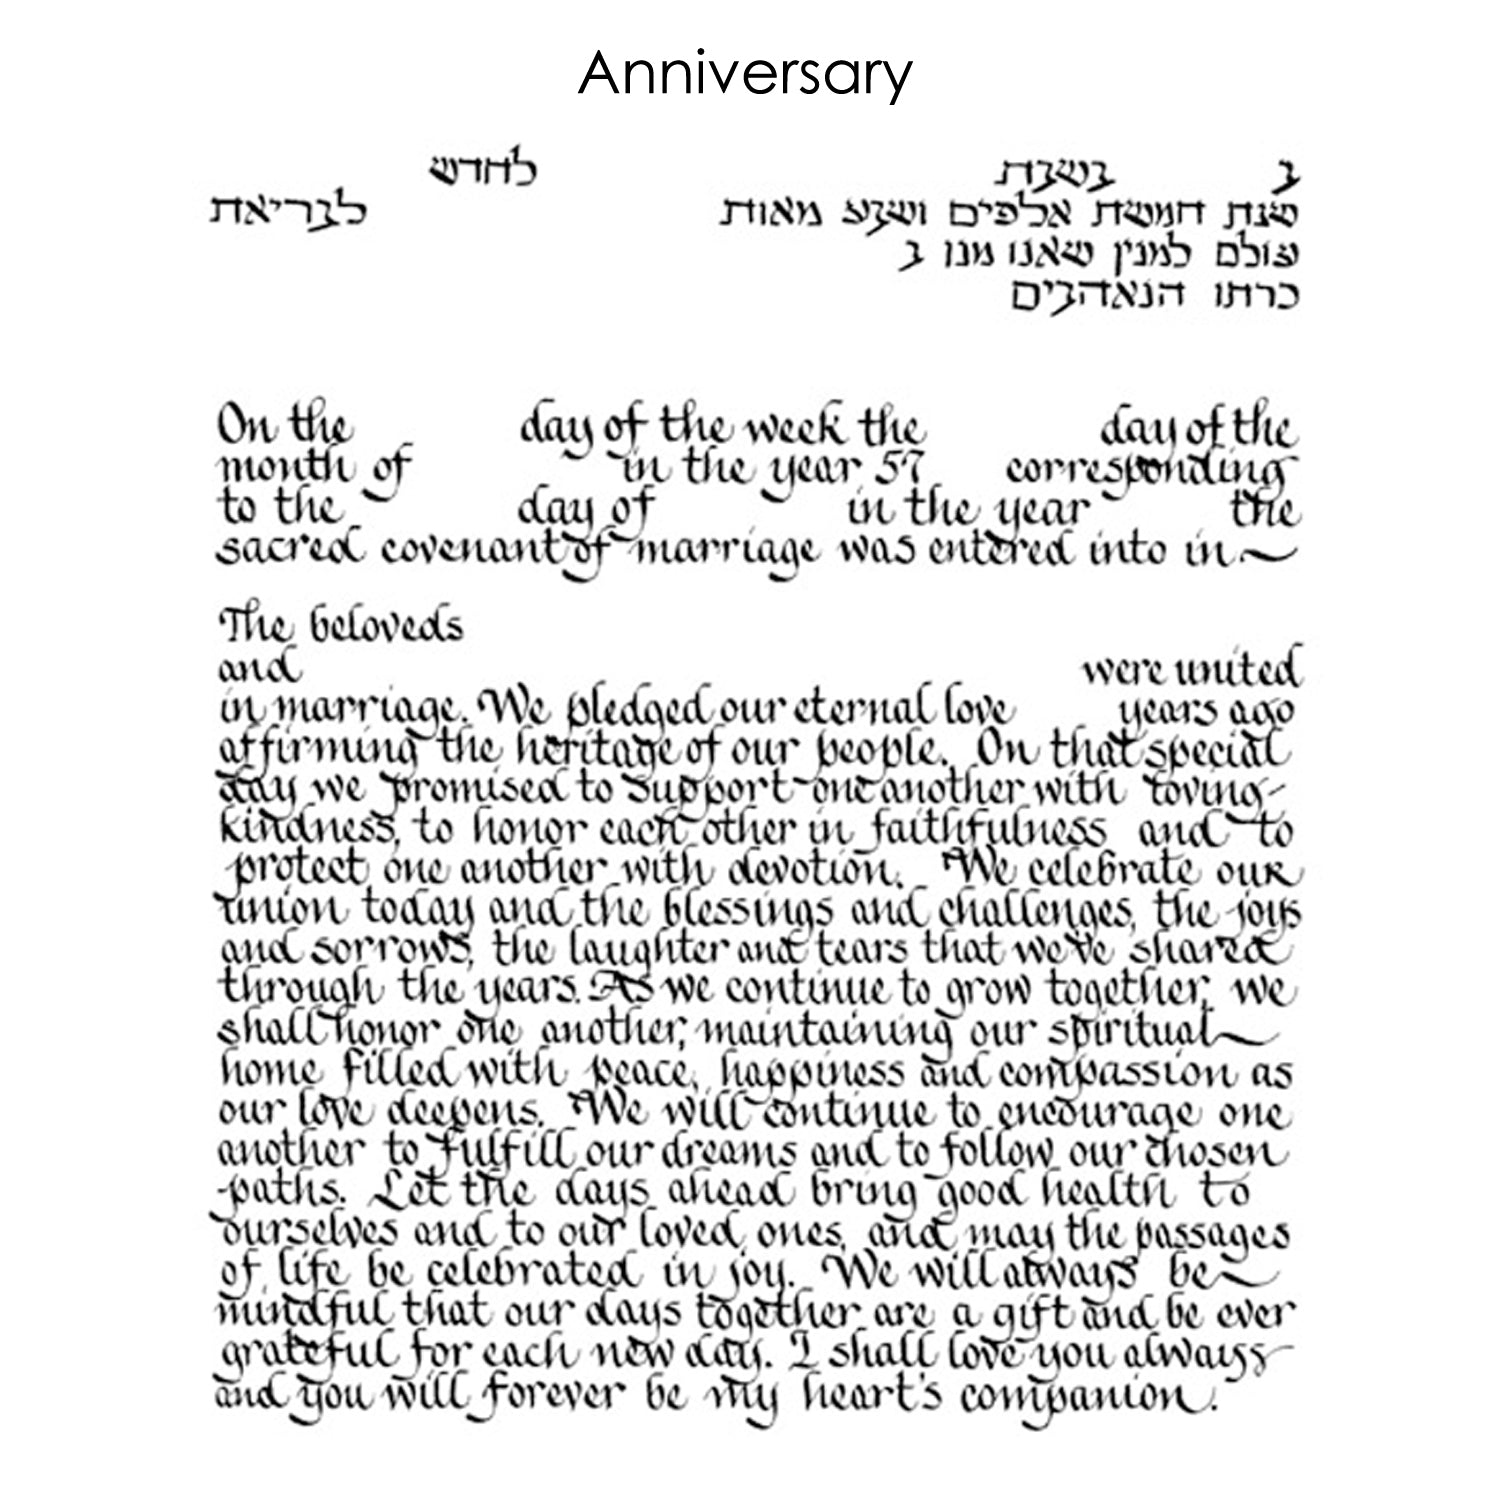 Robin Hall - Anniversary Text